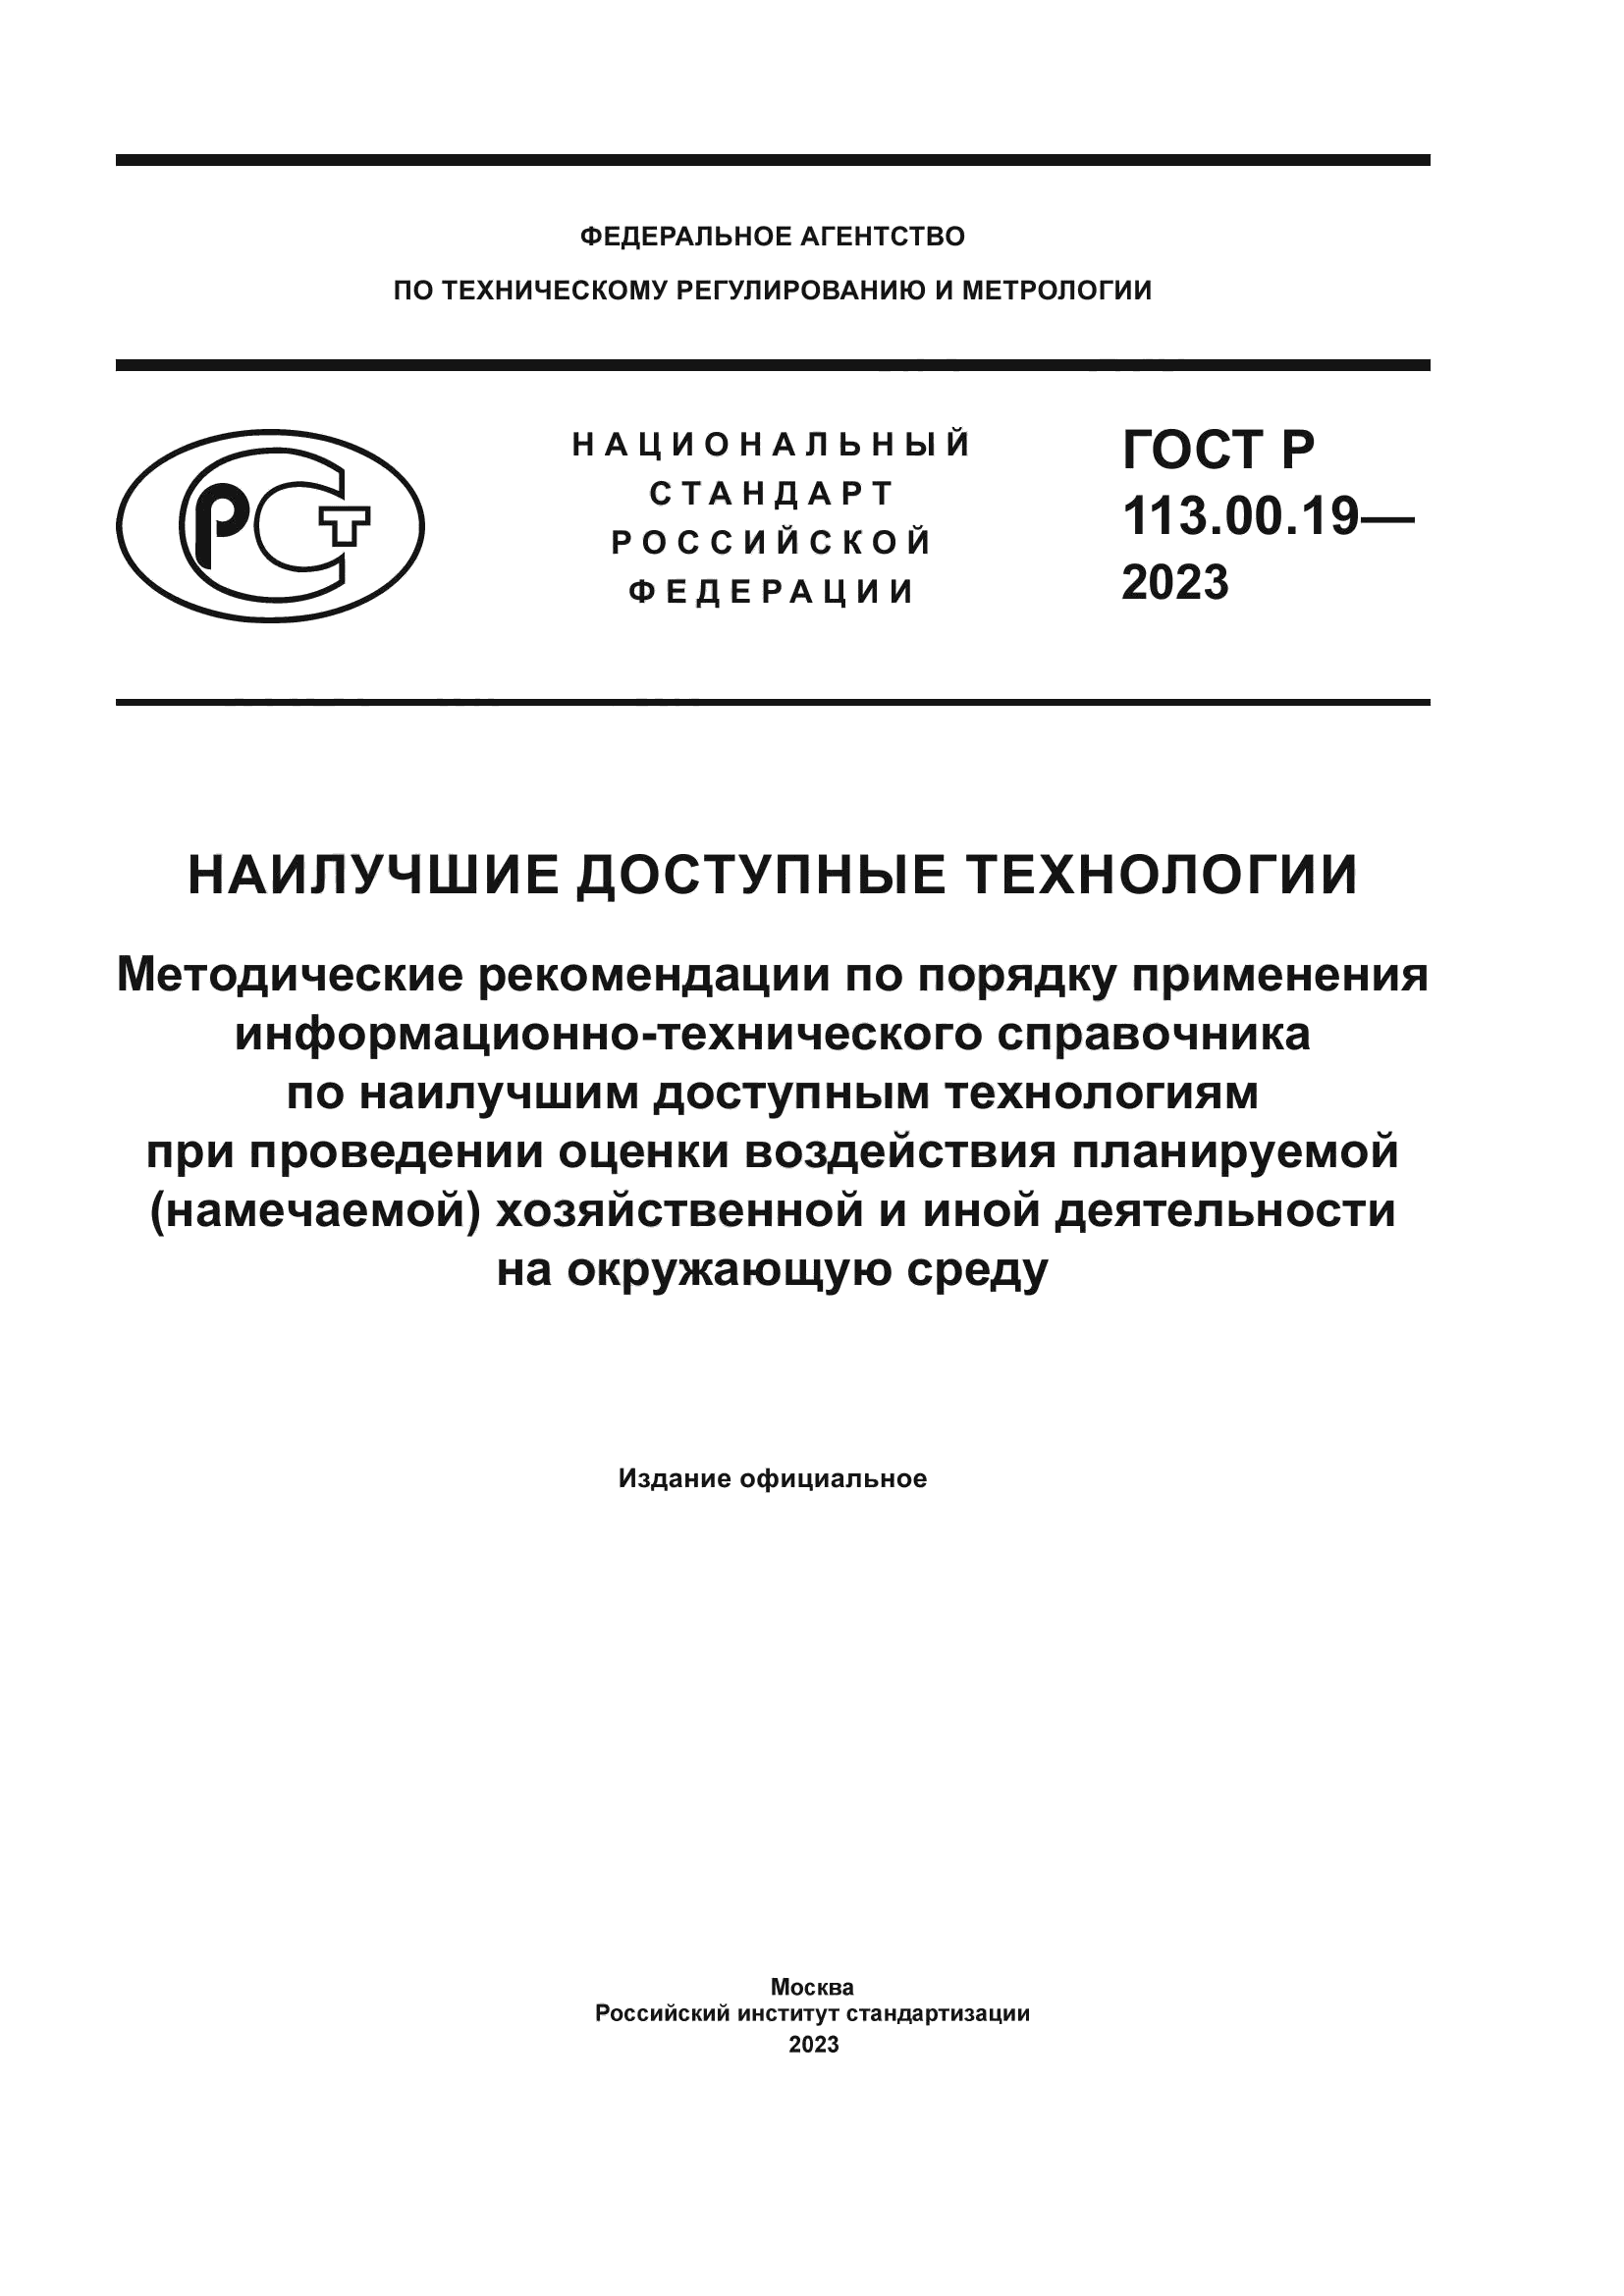 ГОСТ Р 113.00.19-2023